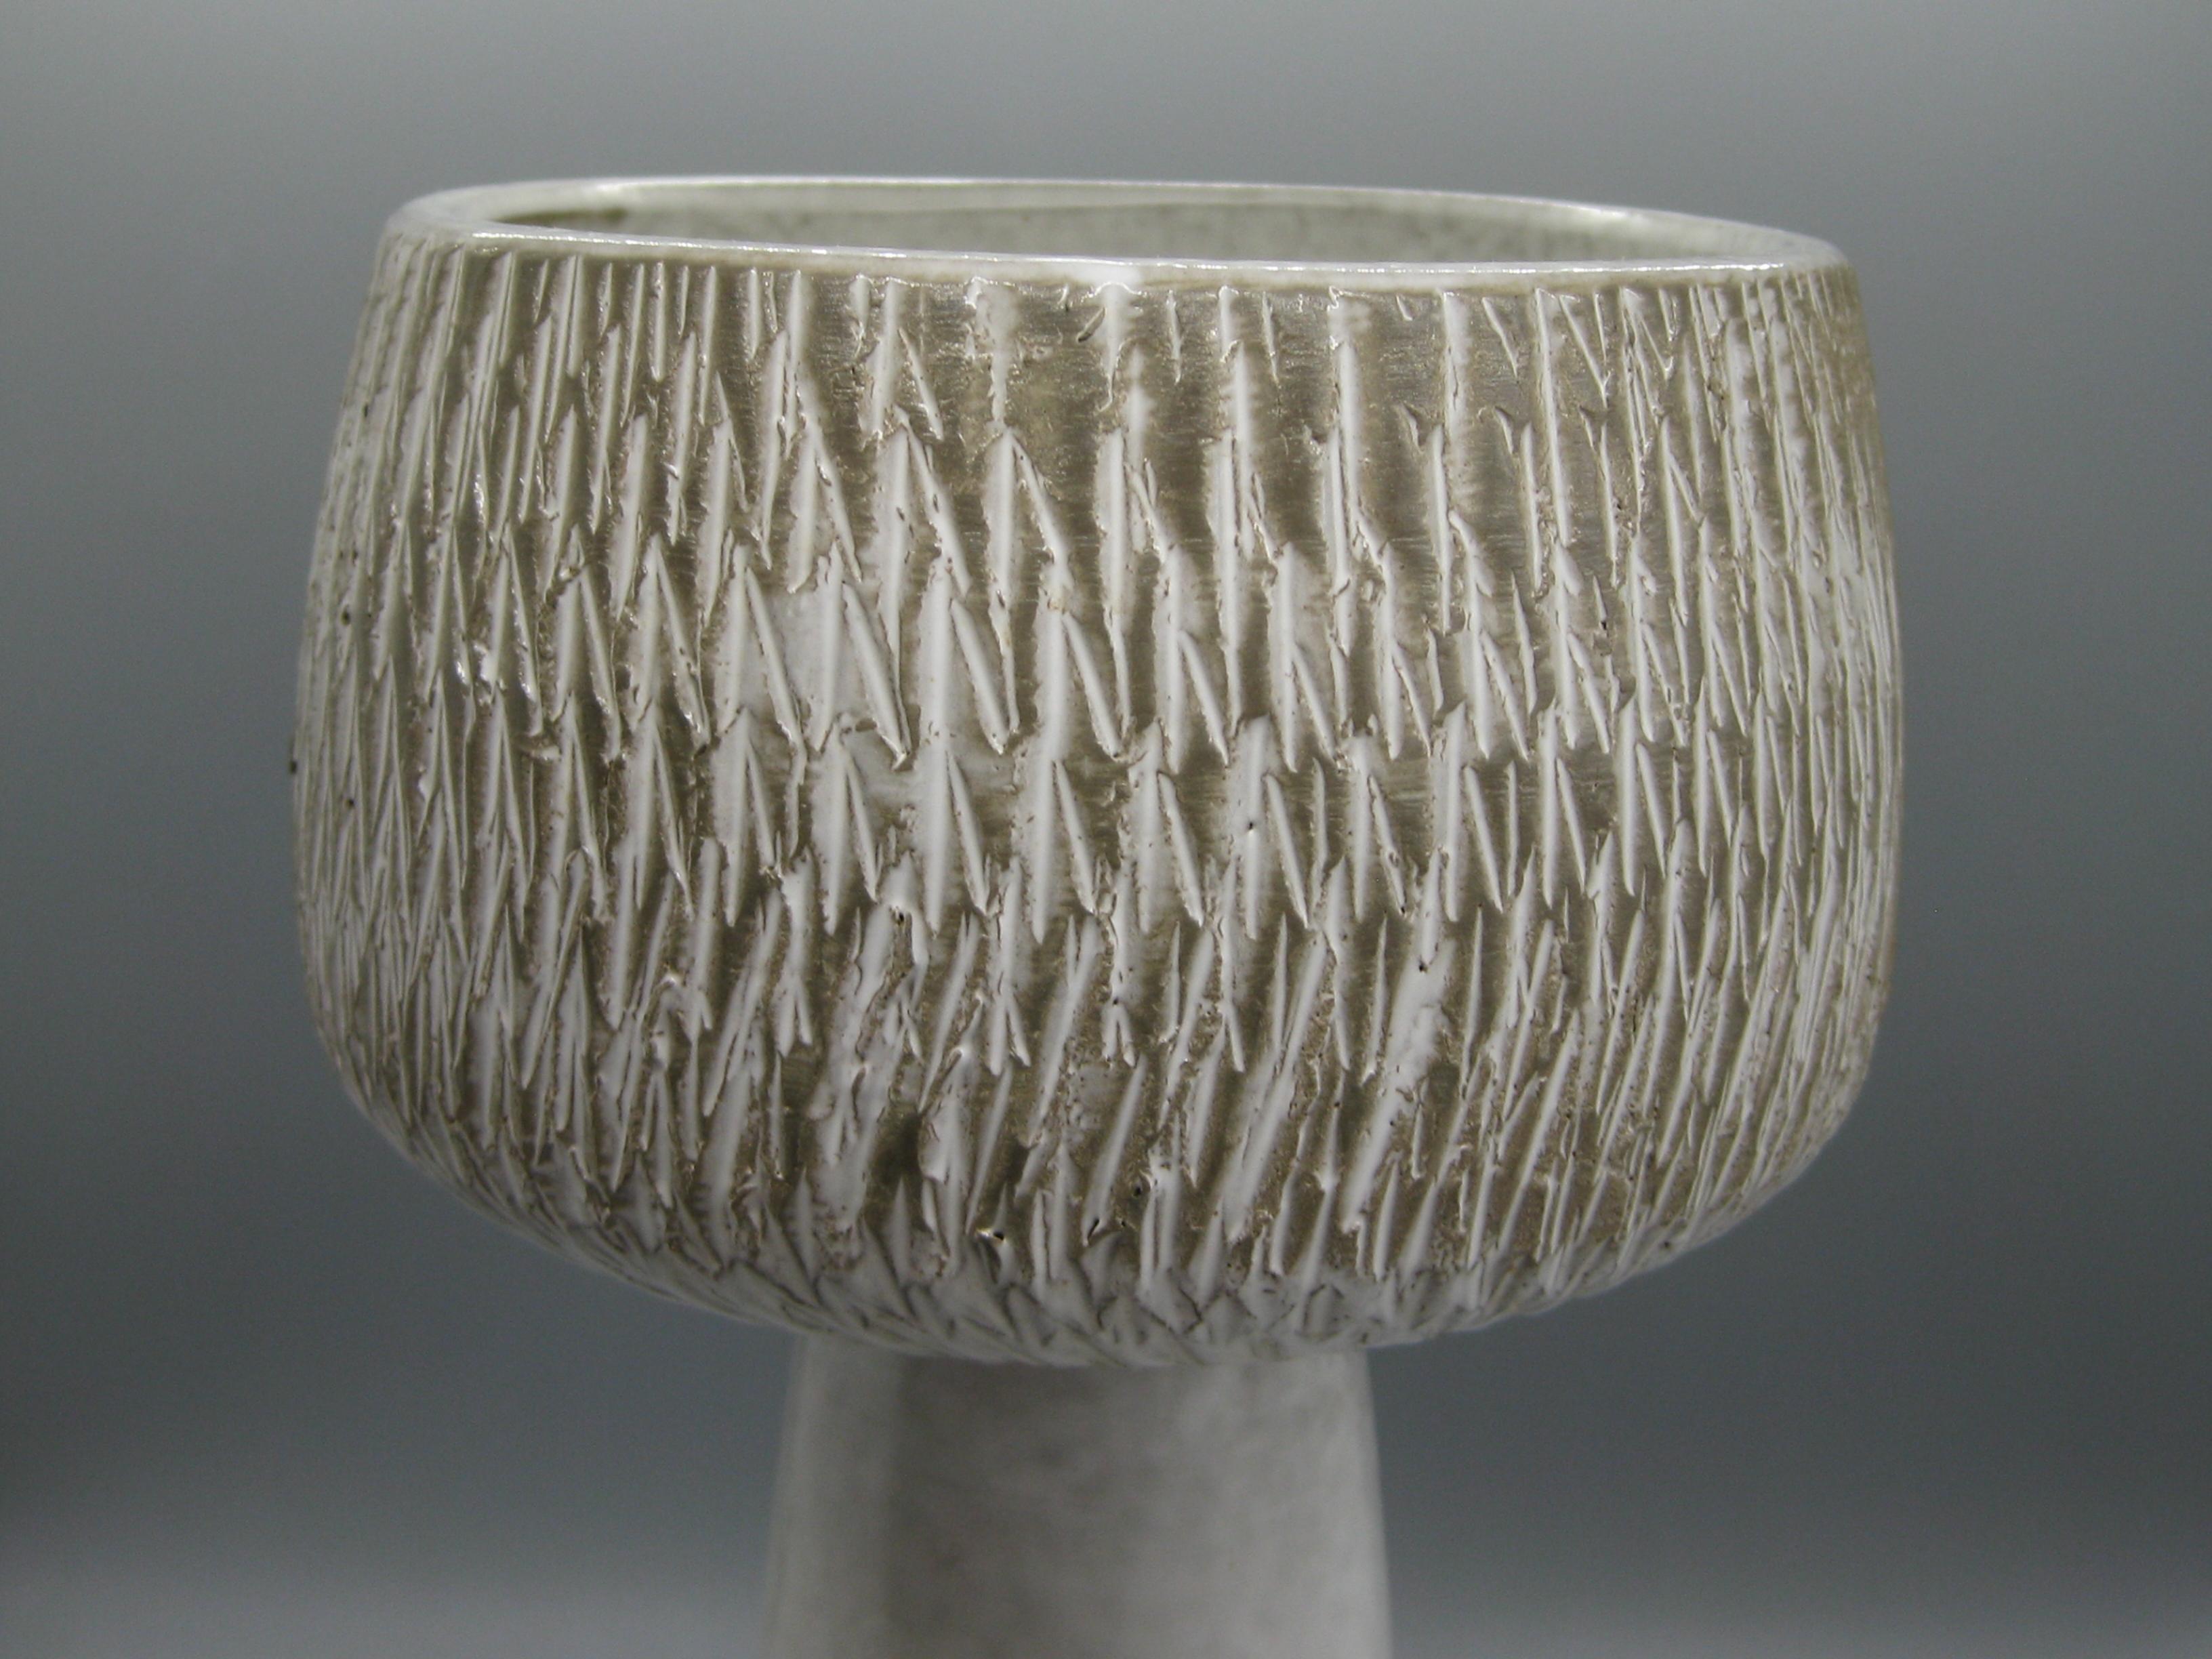 20th Century 1960s Japanese Modernist Ikebana Ceramic Pottery Sgraffito Pedestal Vase Vessel For Sale